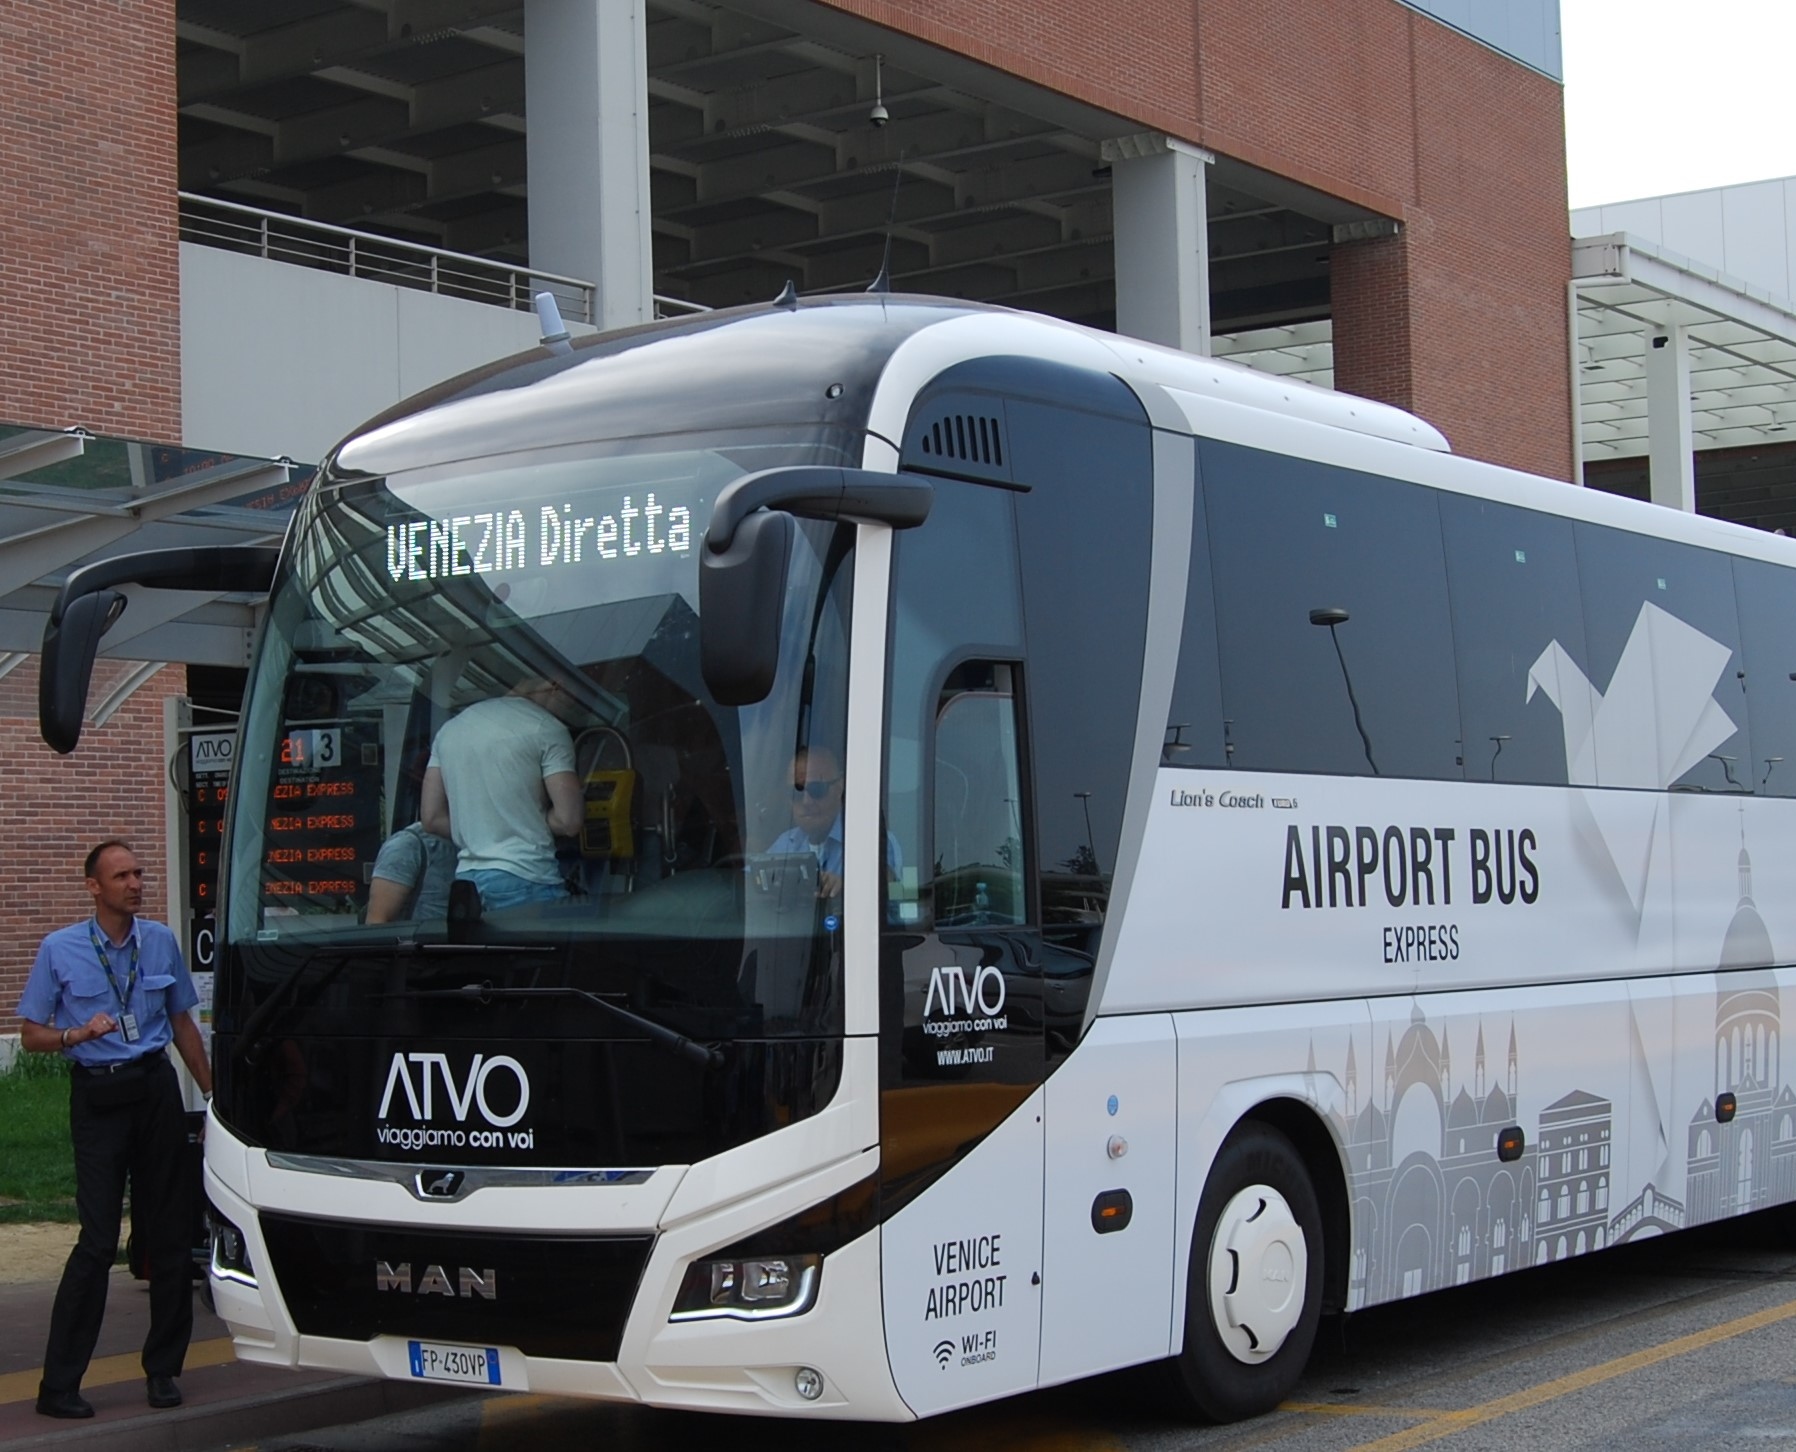 las vegas airport shuttle to venetian